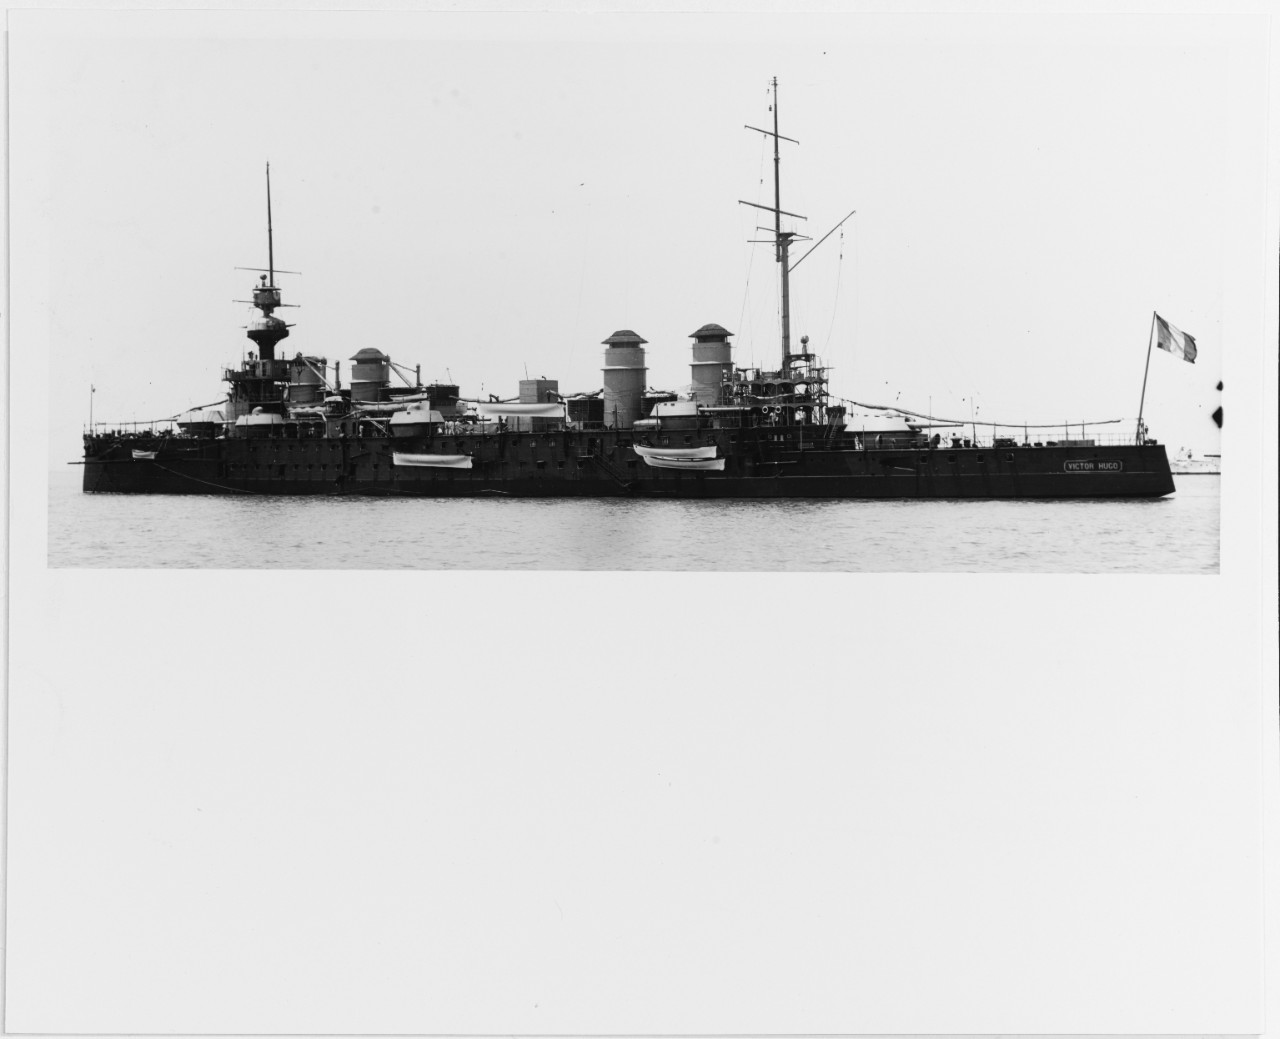 VICTOR HUGO (French armored cruiser, 1904)